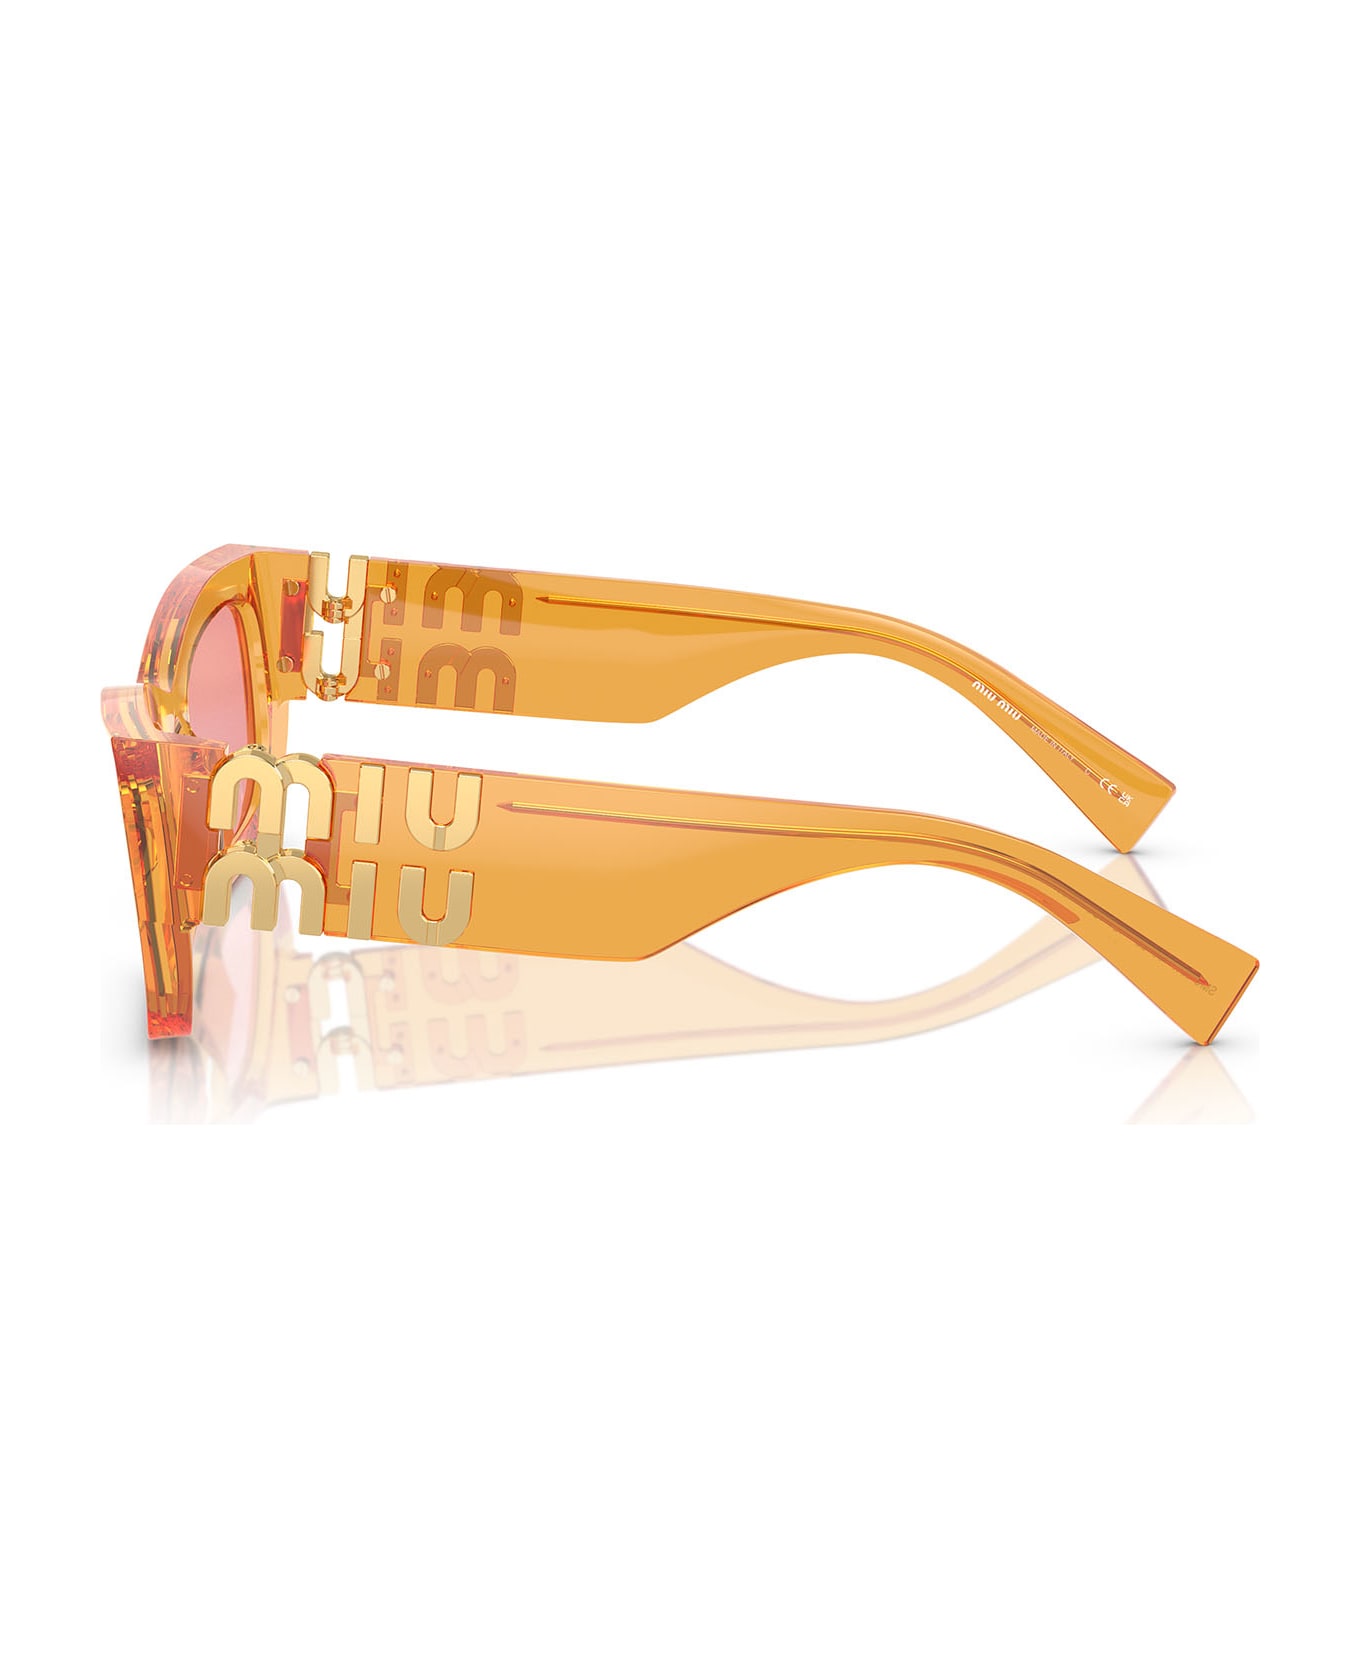 Miu Miu Eyewear Mu 09ws Orange Transparent Sunglasses - Orange Transparent